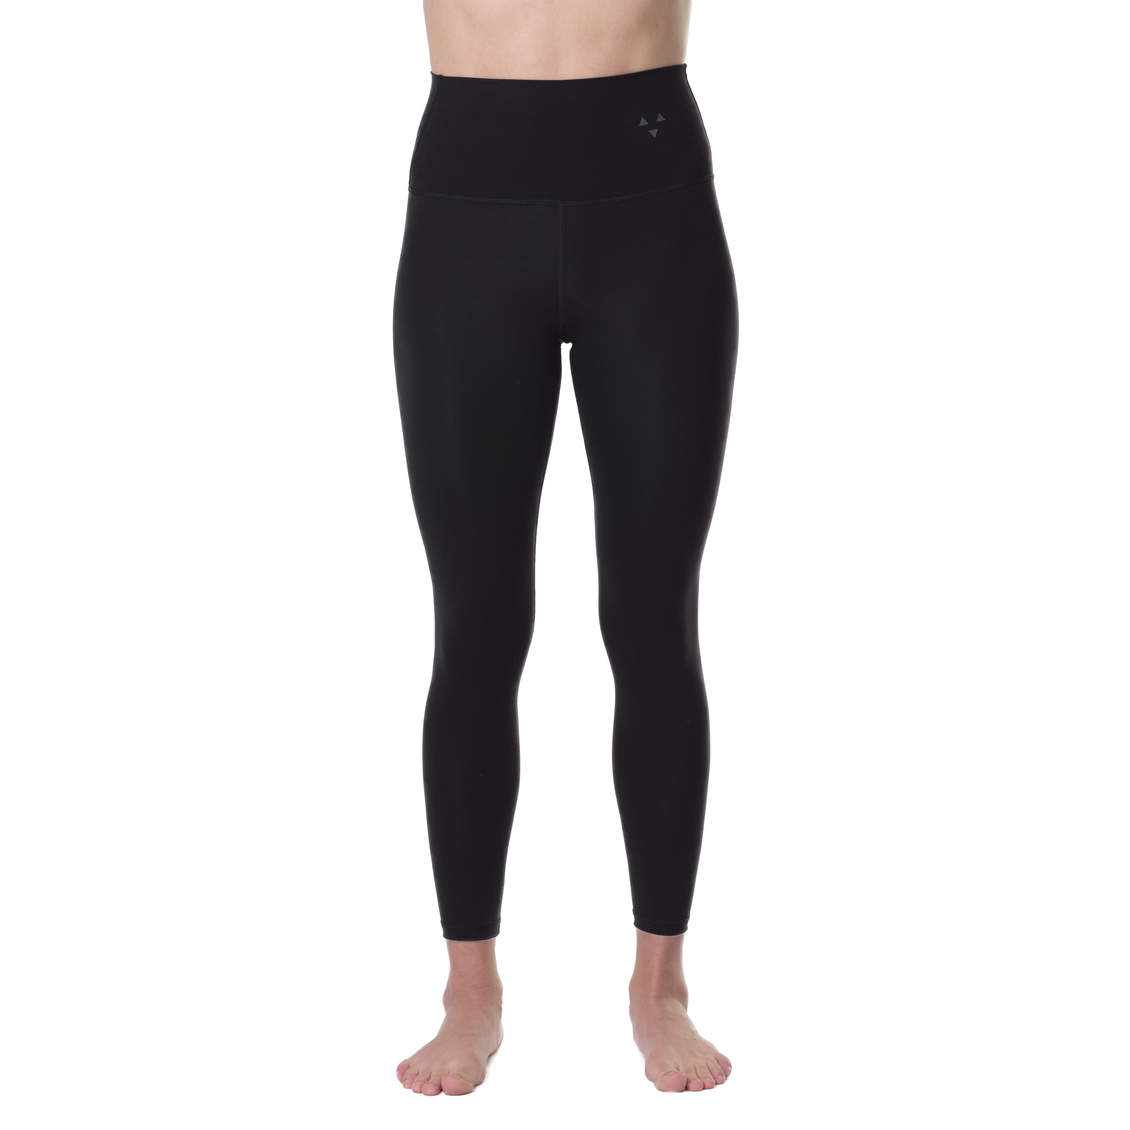 Sustainable long WONDA sports pants in black high waist